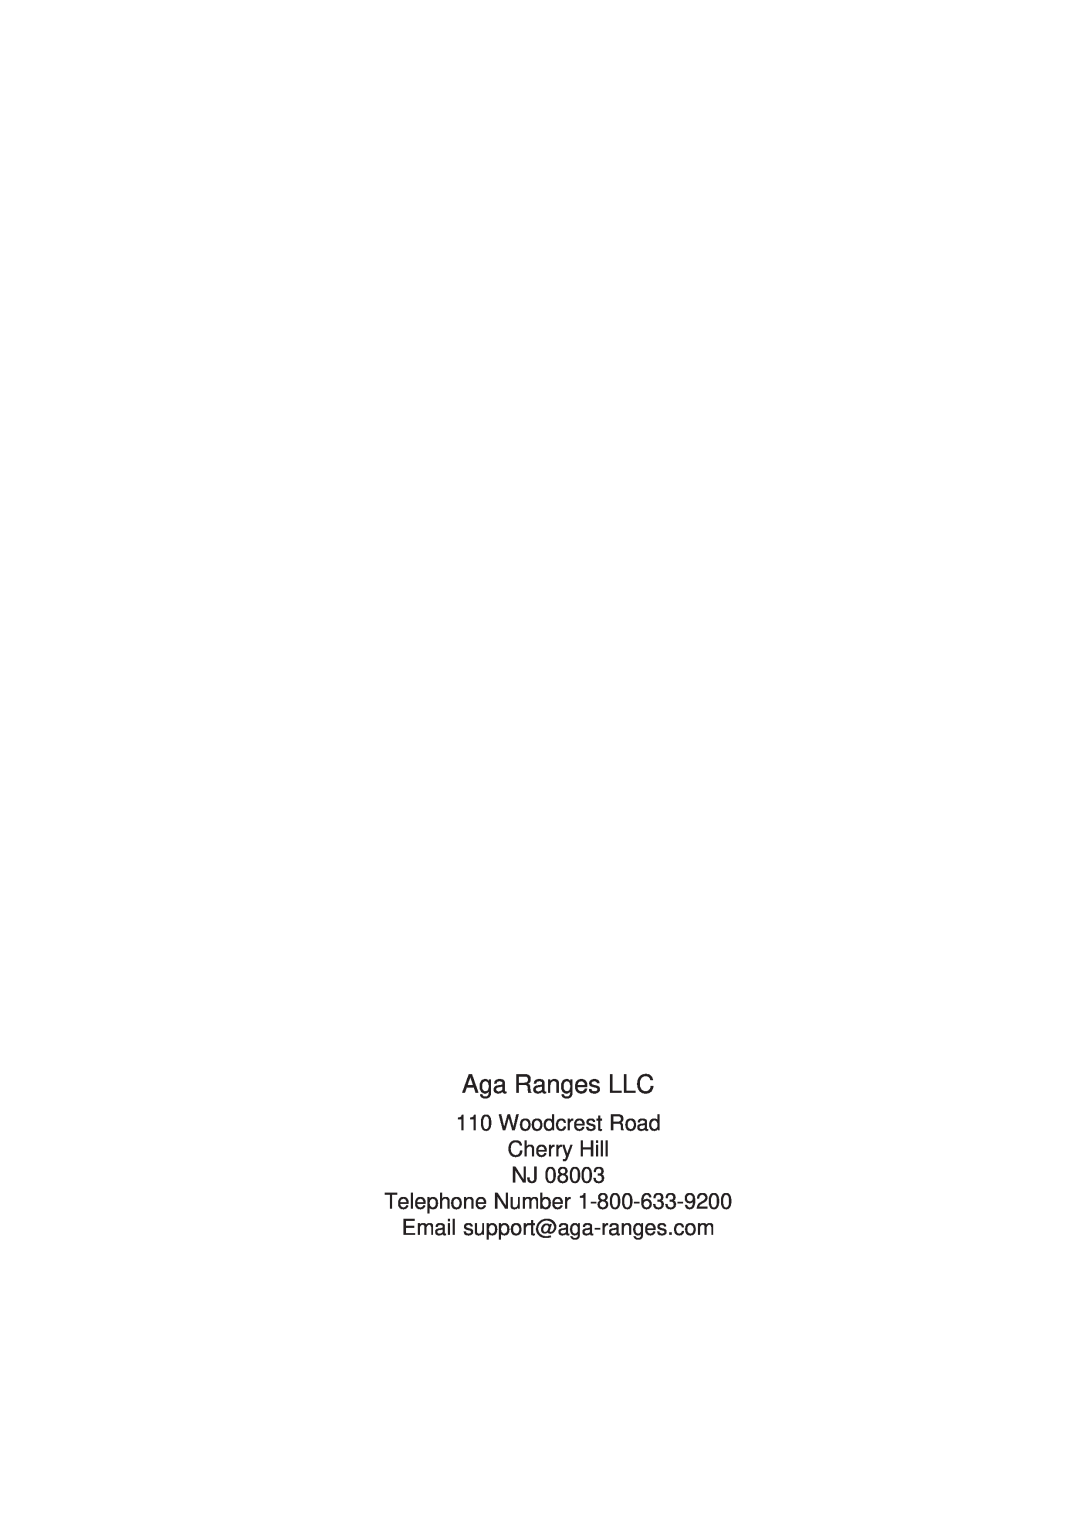 Aga Ranges F104010-01 manual Aga Ranges LLC, Woodcrest Road Cherry Hill NJ 